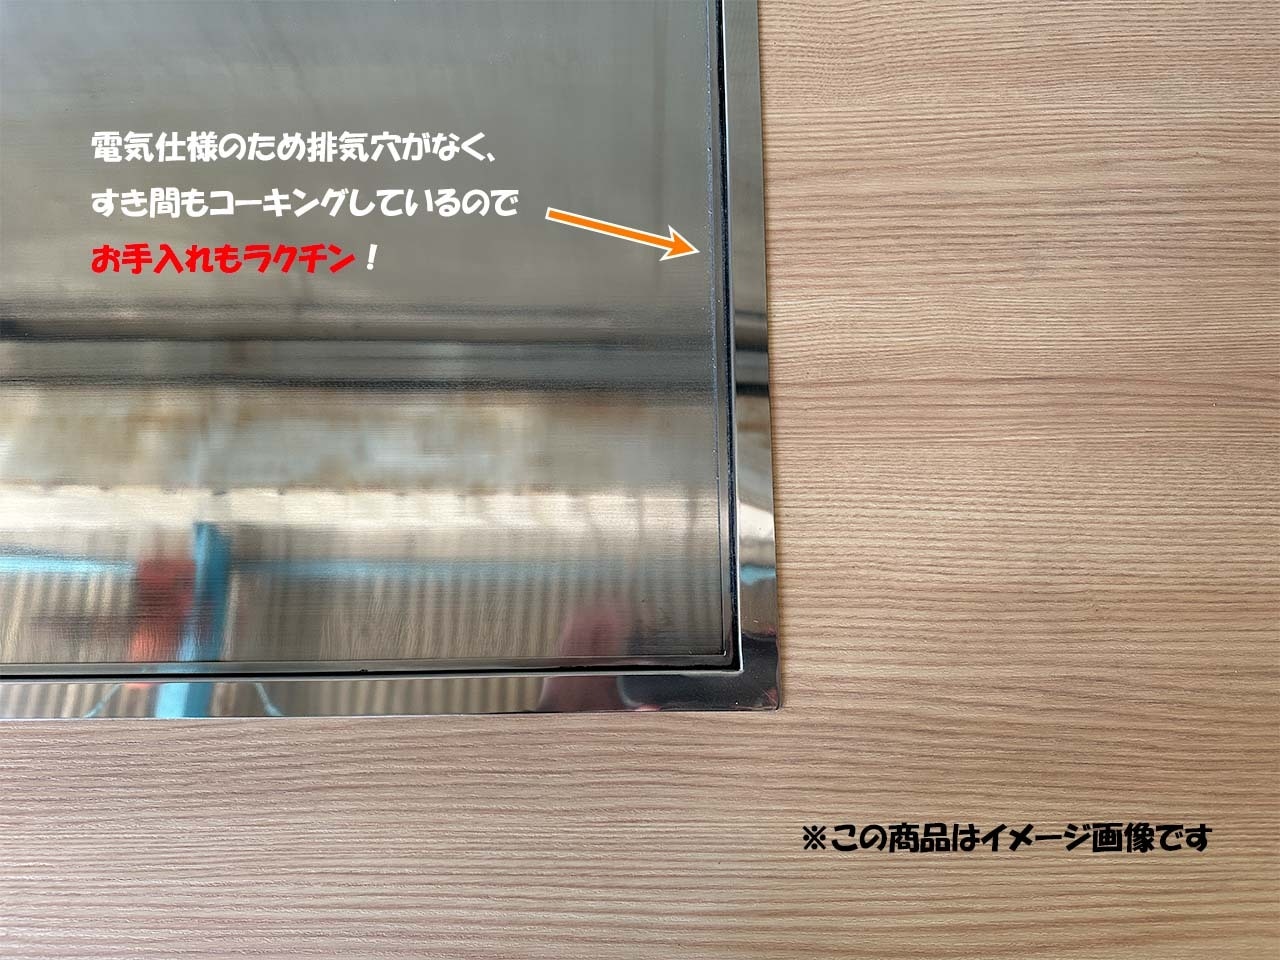 ≪Marutomo≫電気式お好み焼きテーブル1280(茶)